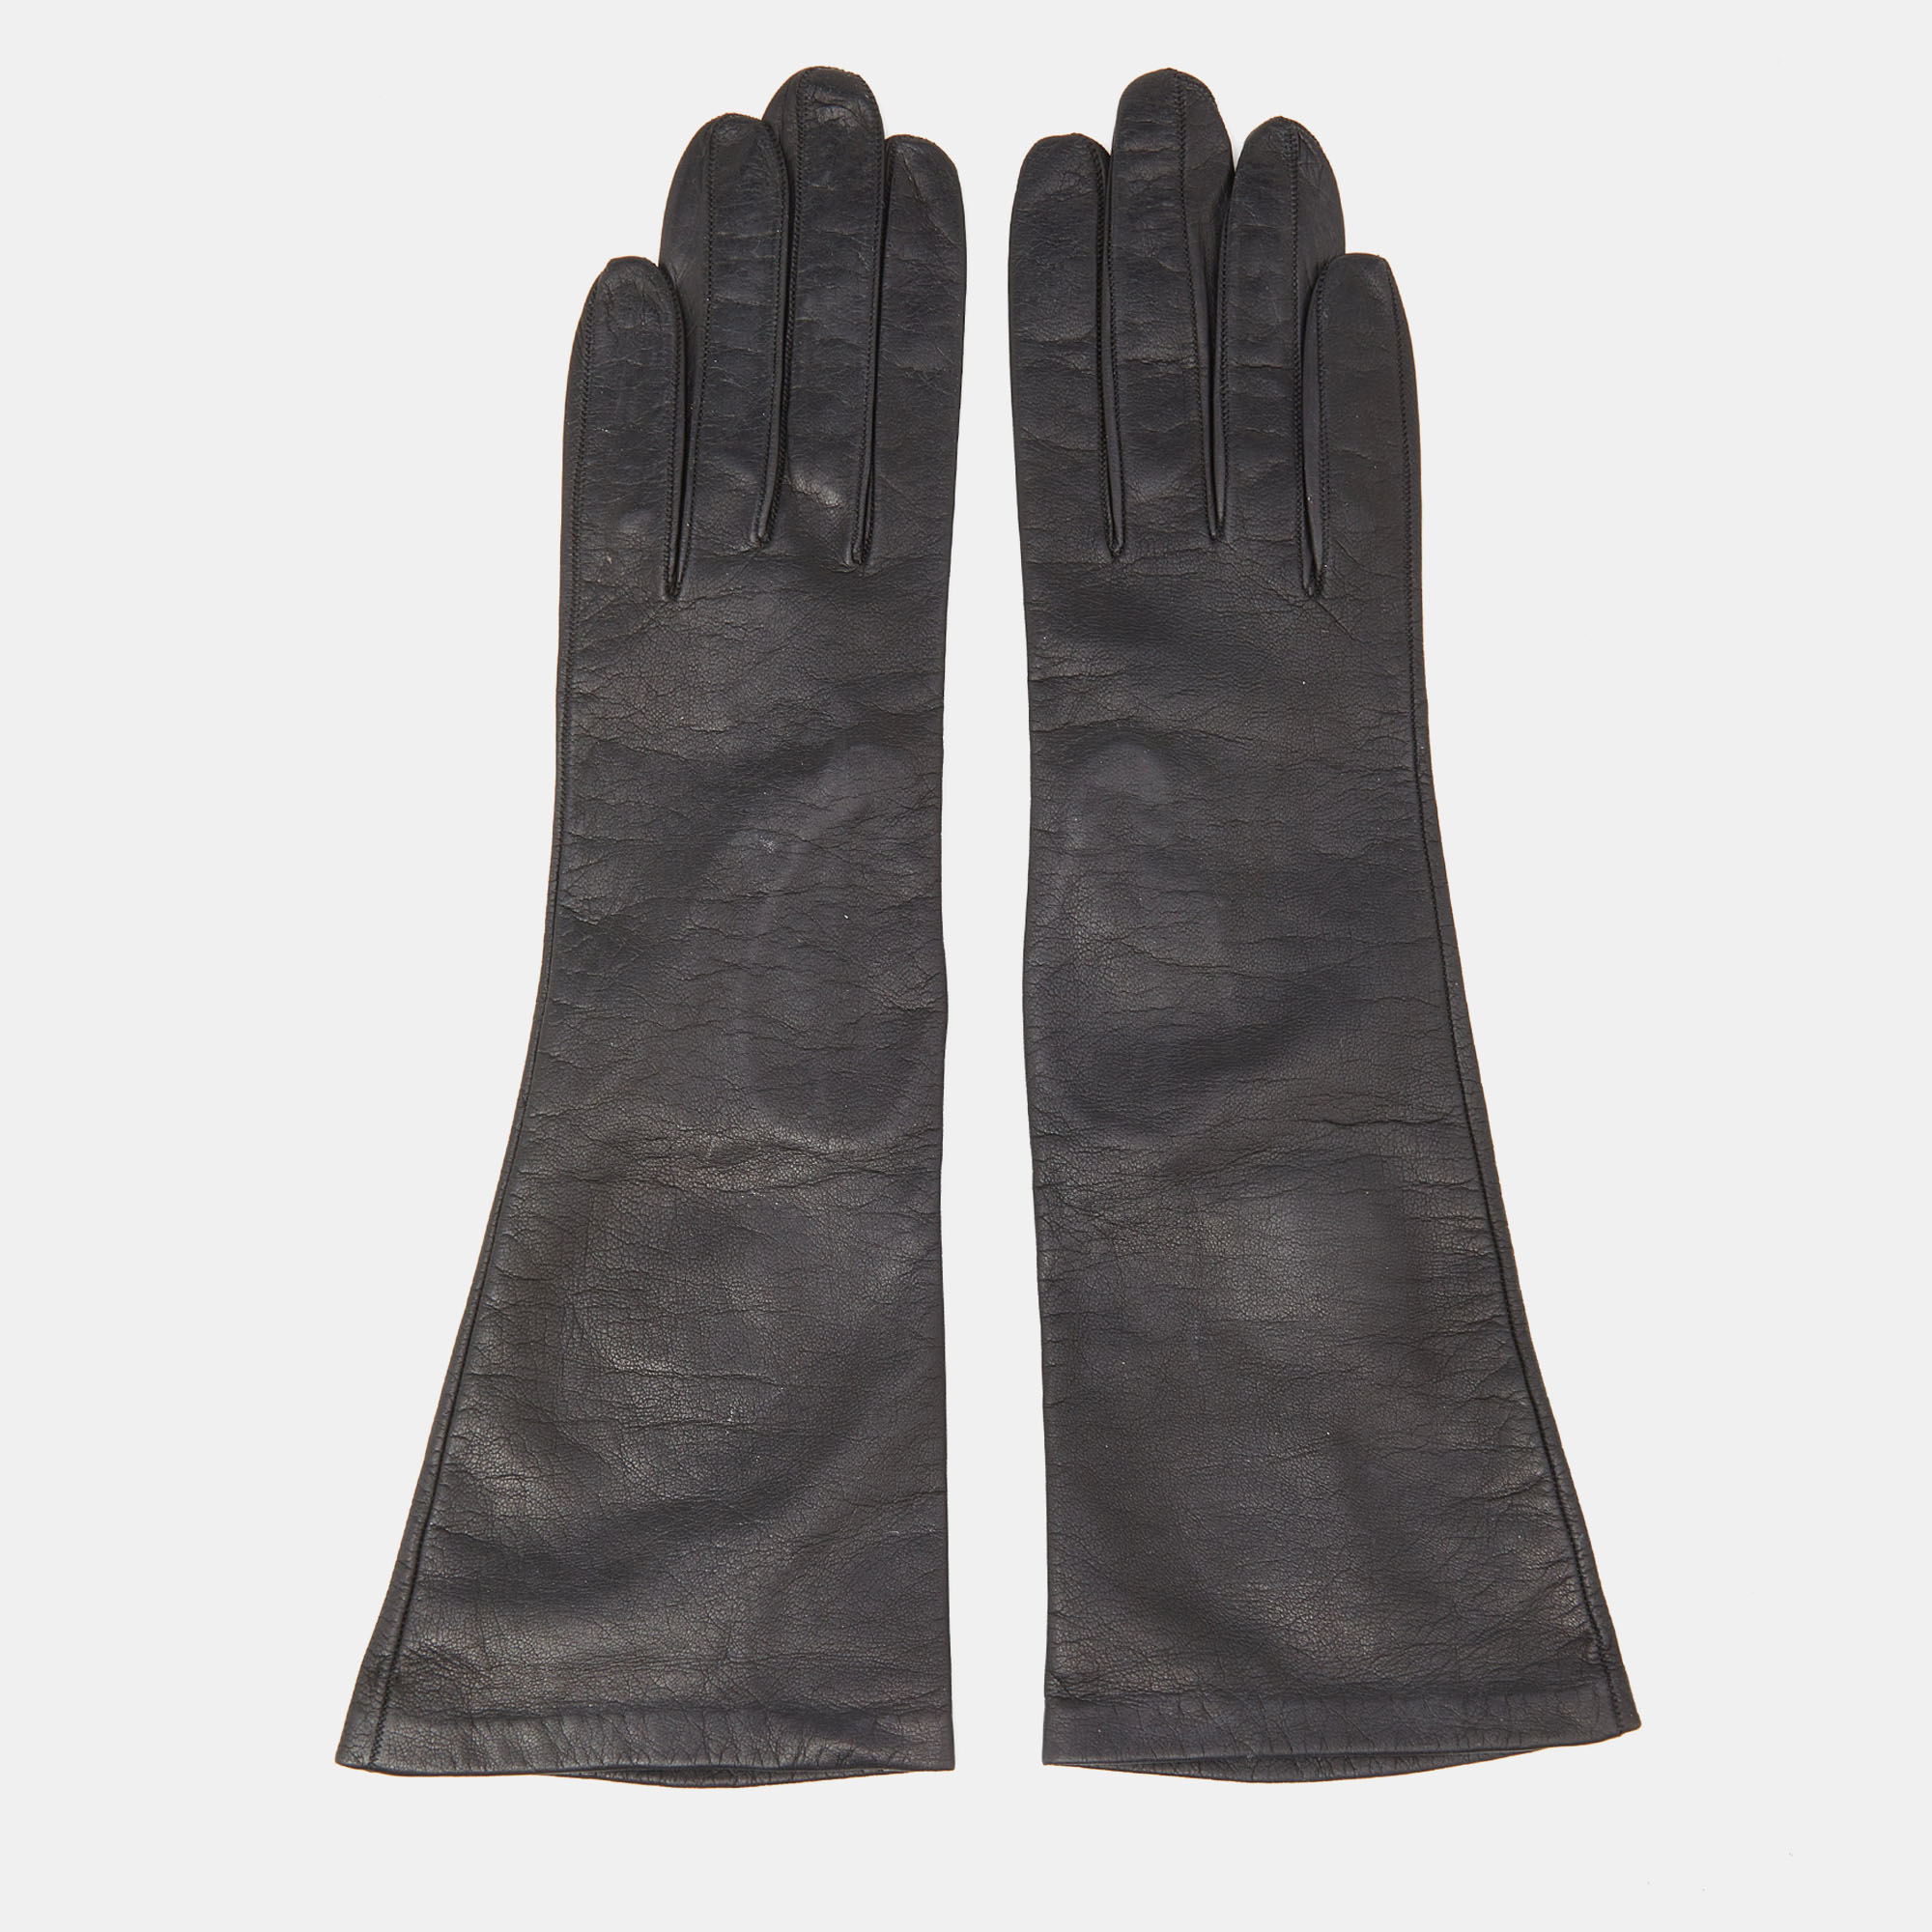 Christian dior vintage chevreau black leather gloves size 6